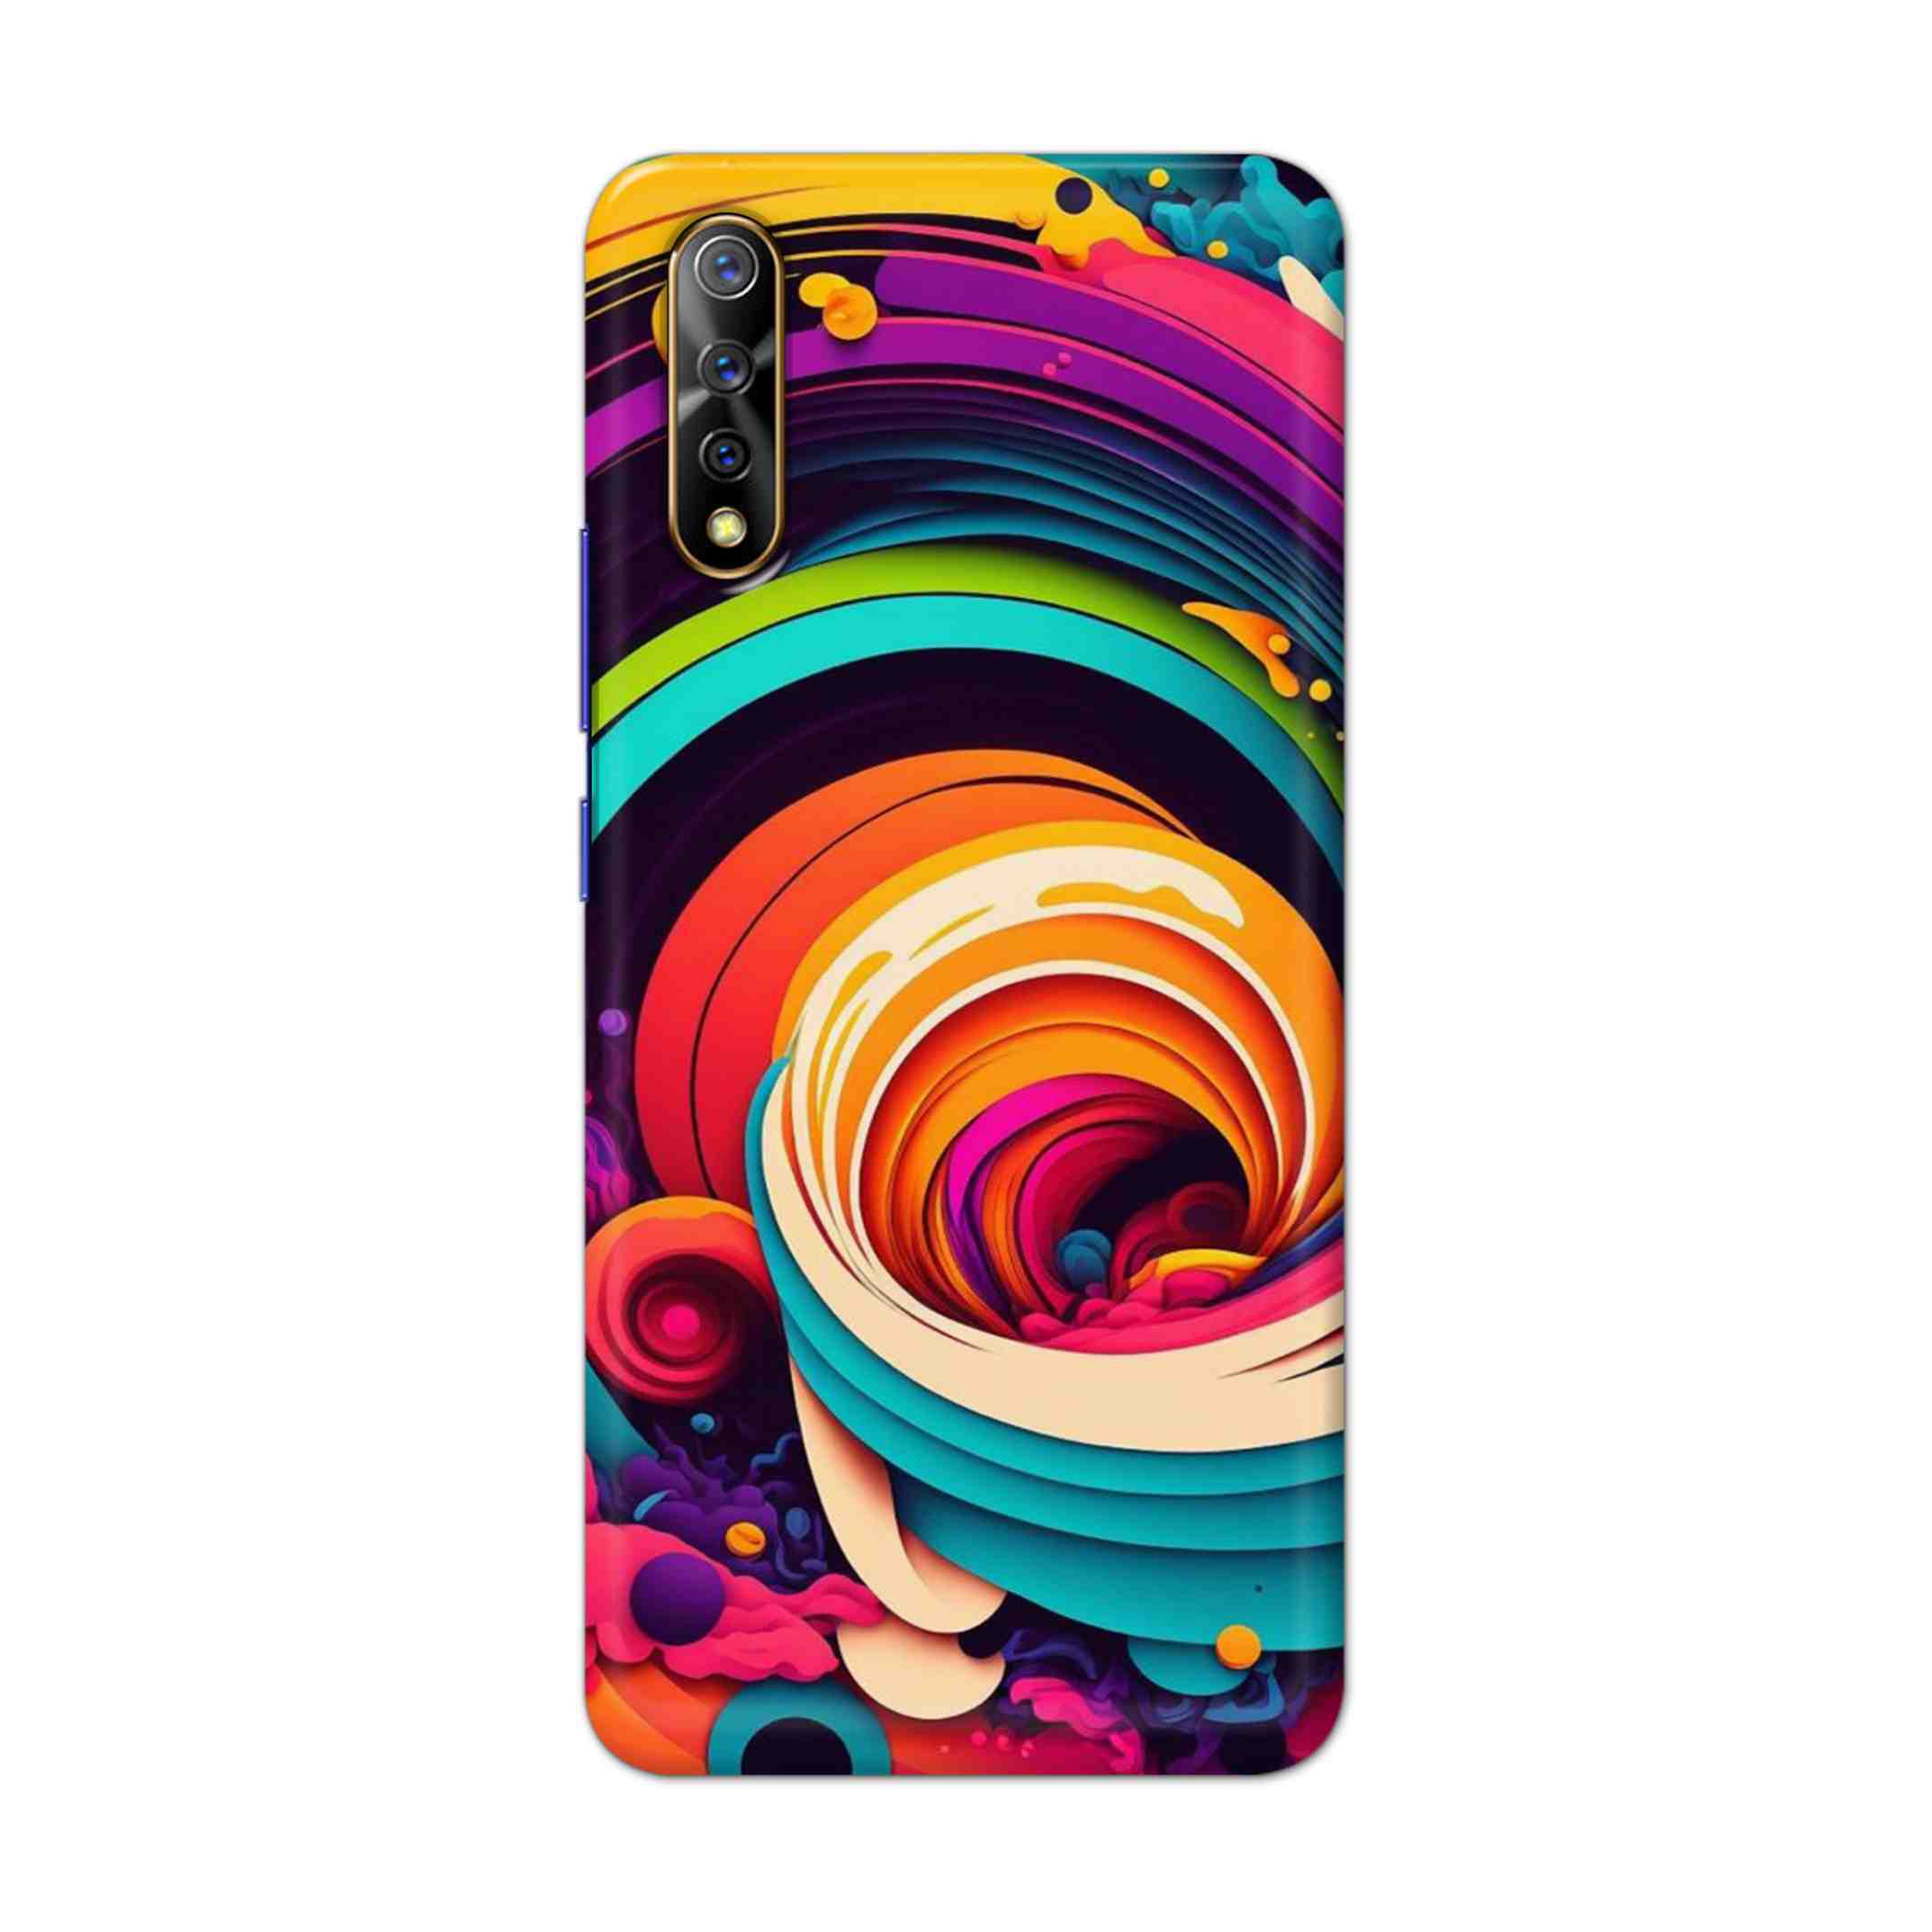 Buy Colour Circle Hard Back Mobile Phone Case Cover For Vivo S1 / Z1x Online